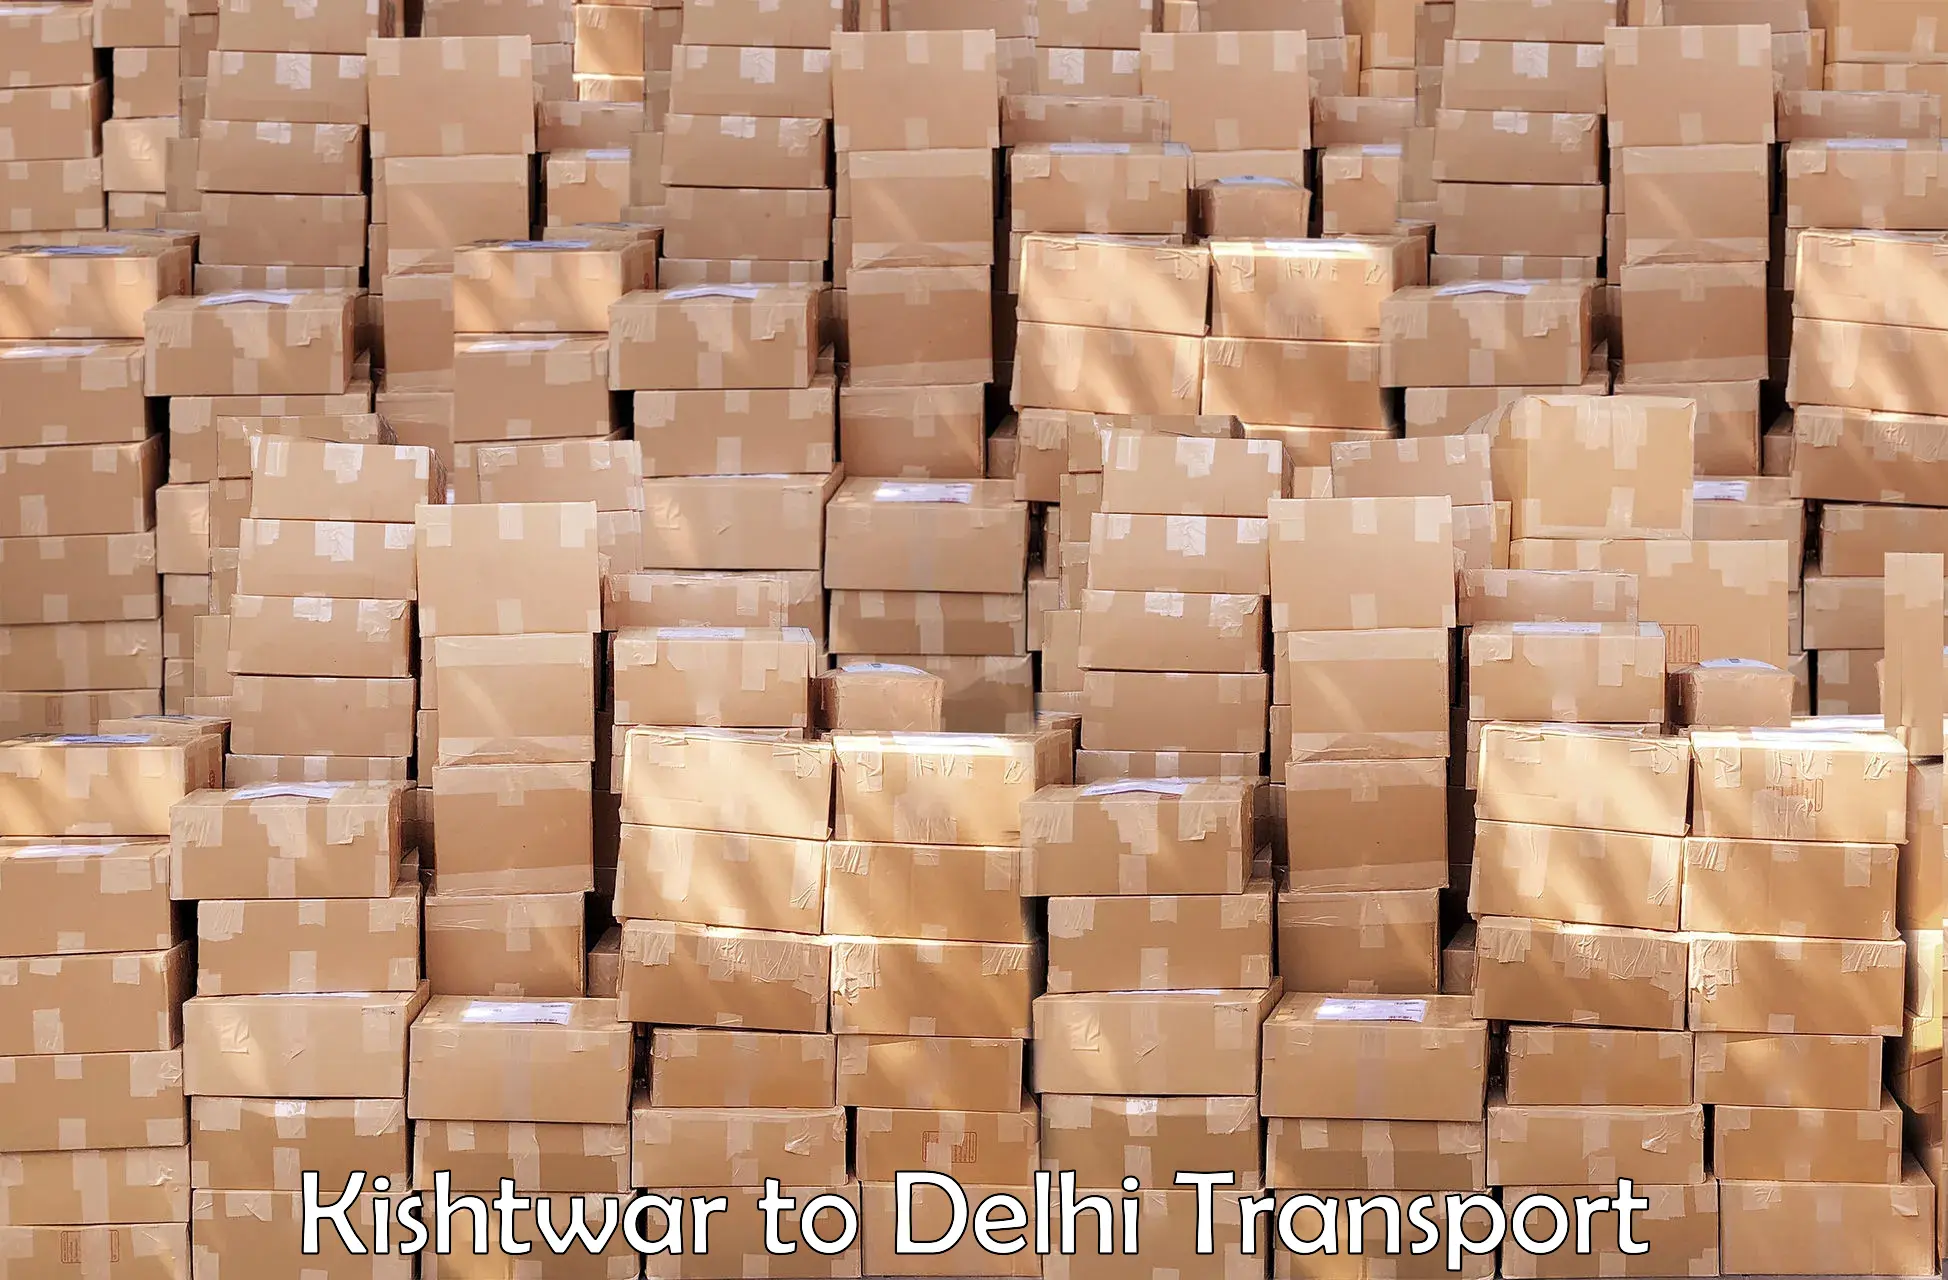 Truck transport companies in India Kishtwar to NCR